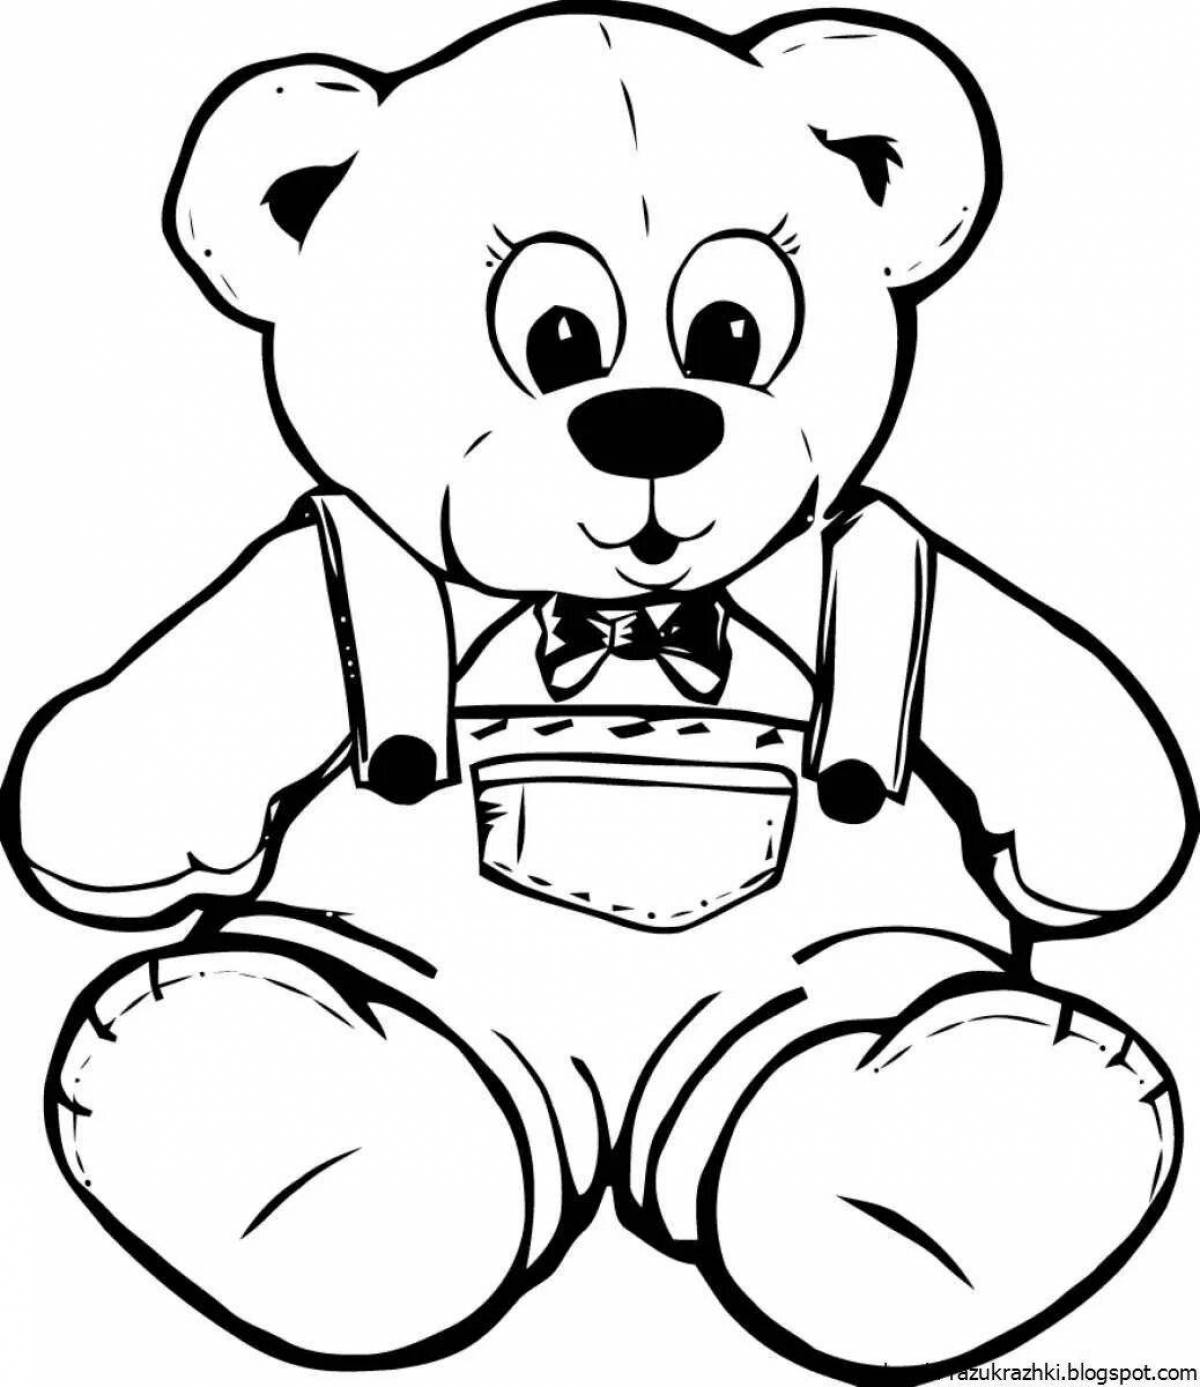 Furry bear coloring book